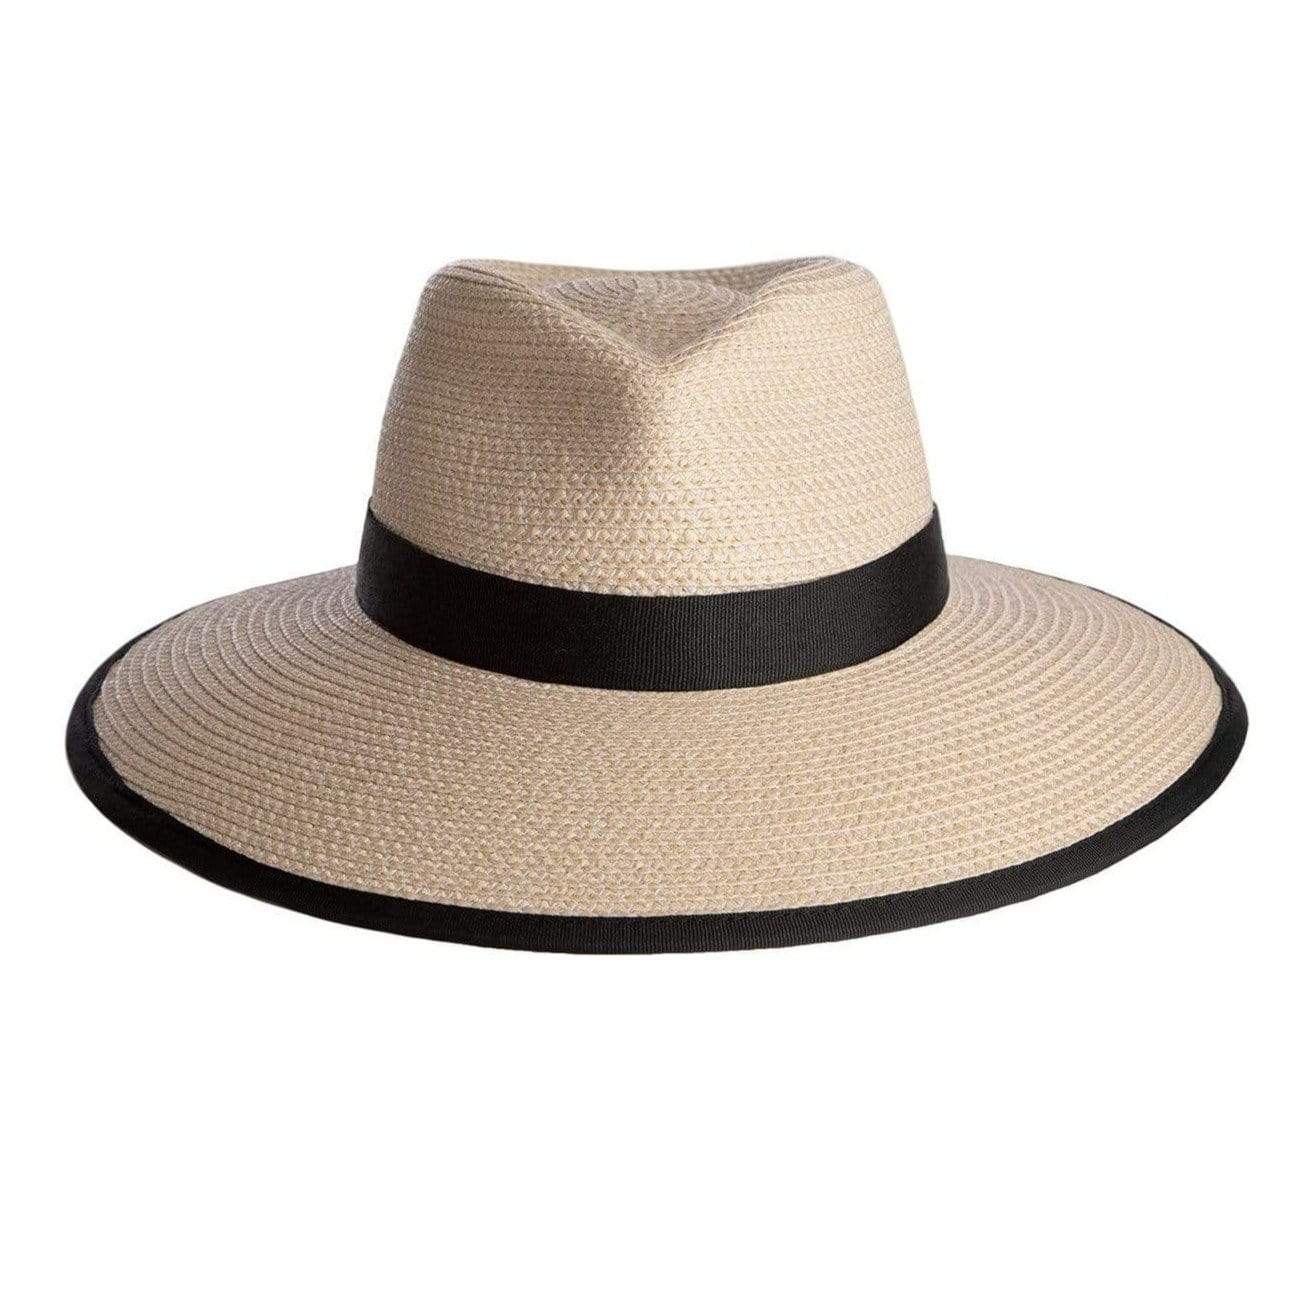 eric-javits-women-hats-cream-black-sun-crest-visor-hat-bone-mix-28205920321694_1800x1800_99c05d7e-a512-4750-bb8b-072cf2da87f6.jpg